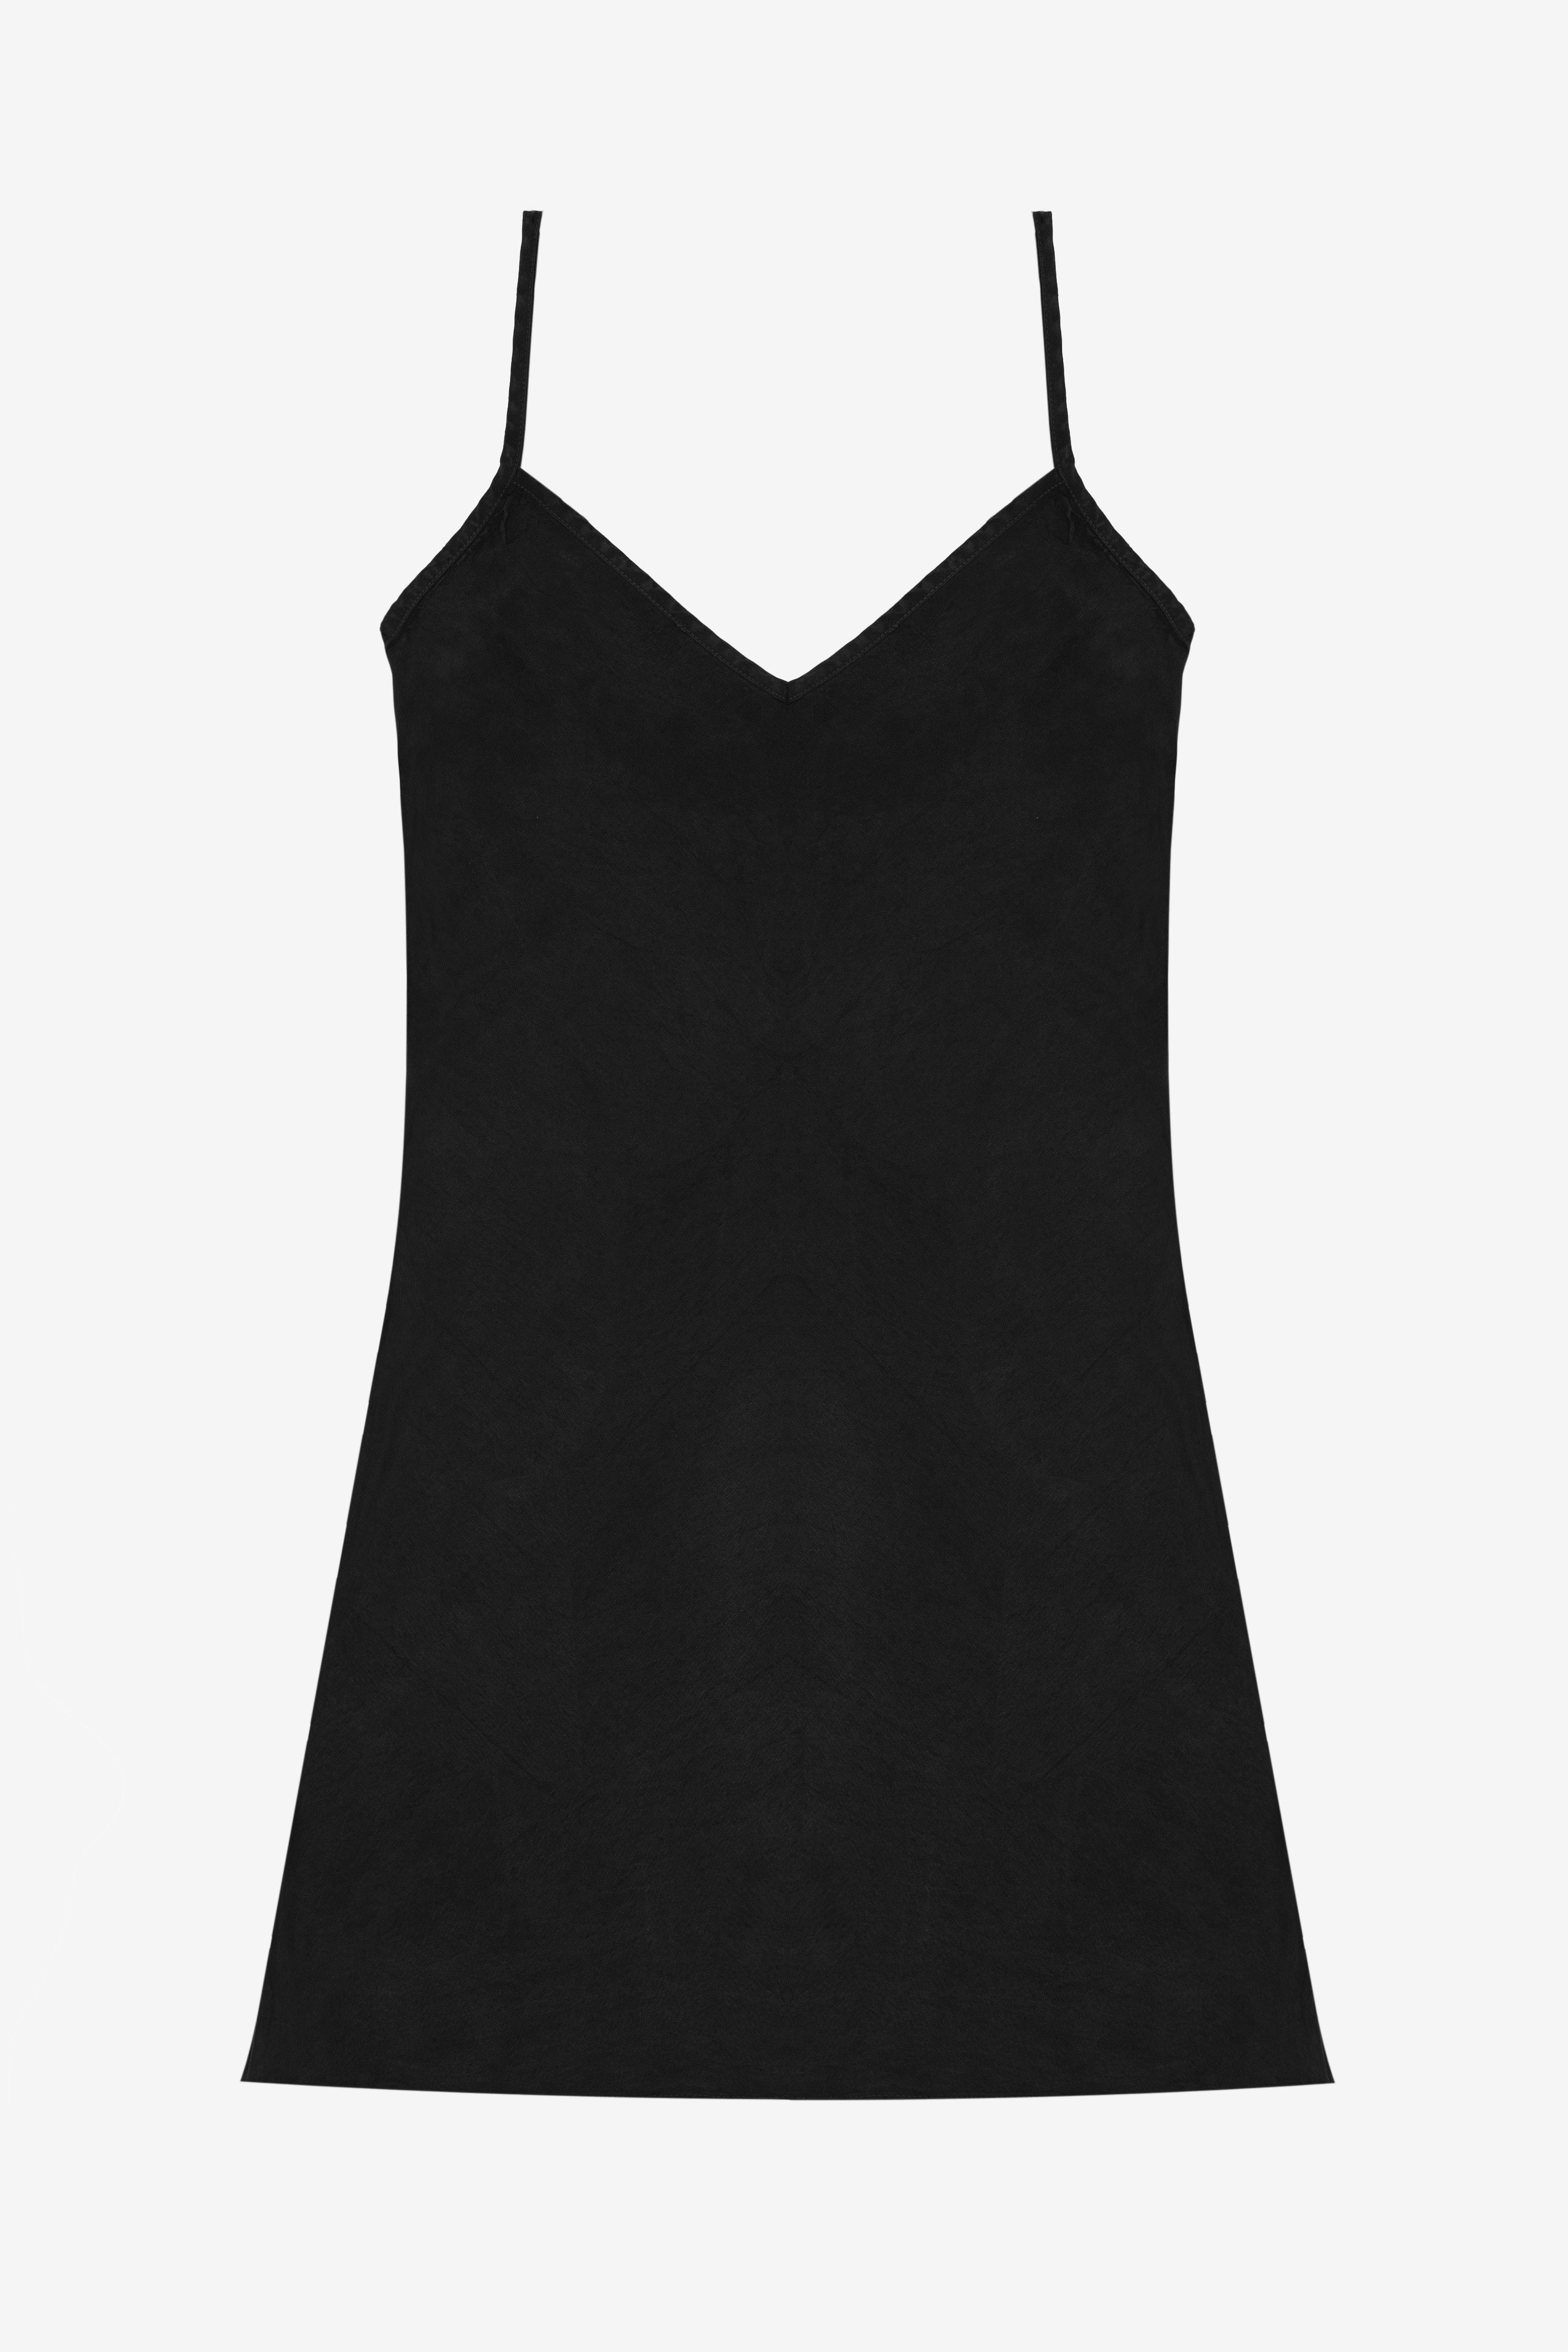 Noe Undergarments Alfie Slip Dress Black SLW13-001 - Free Shipping